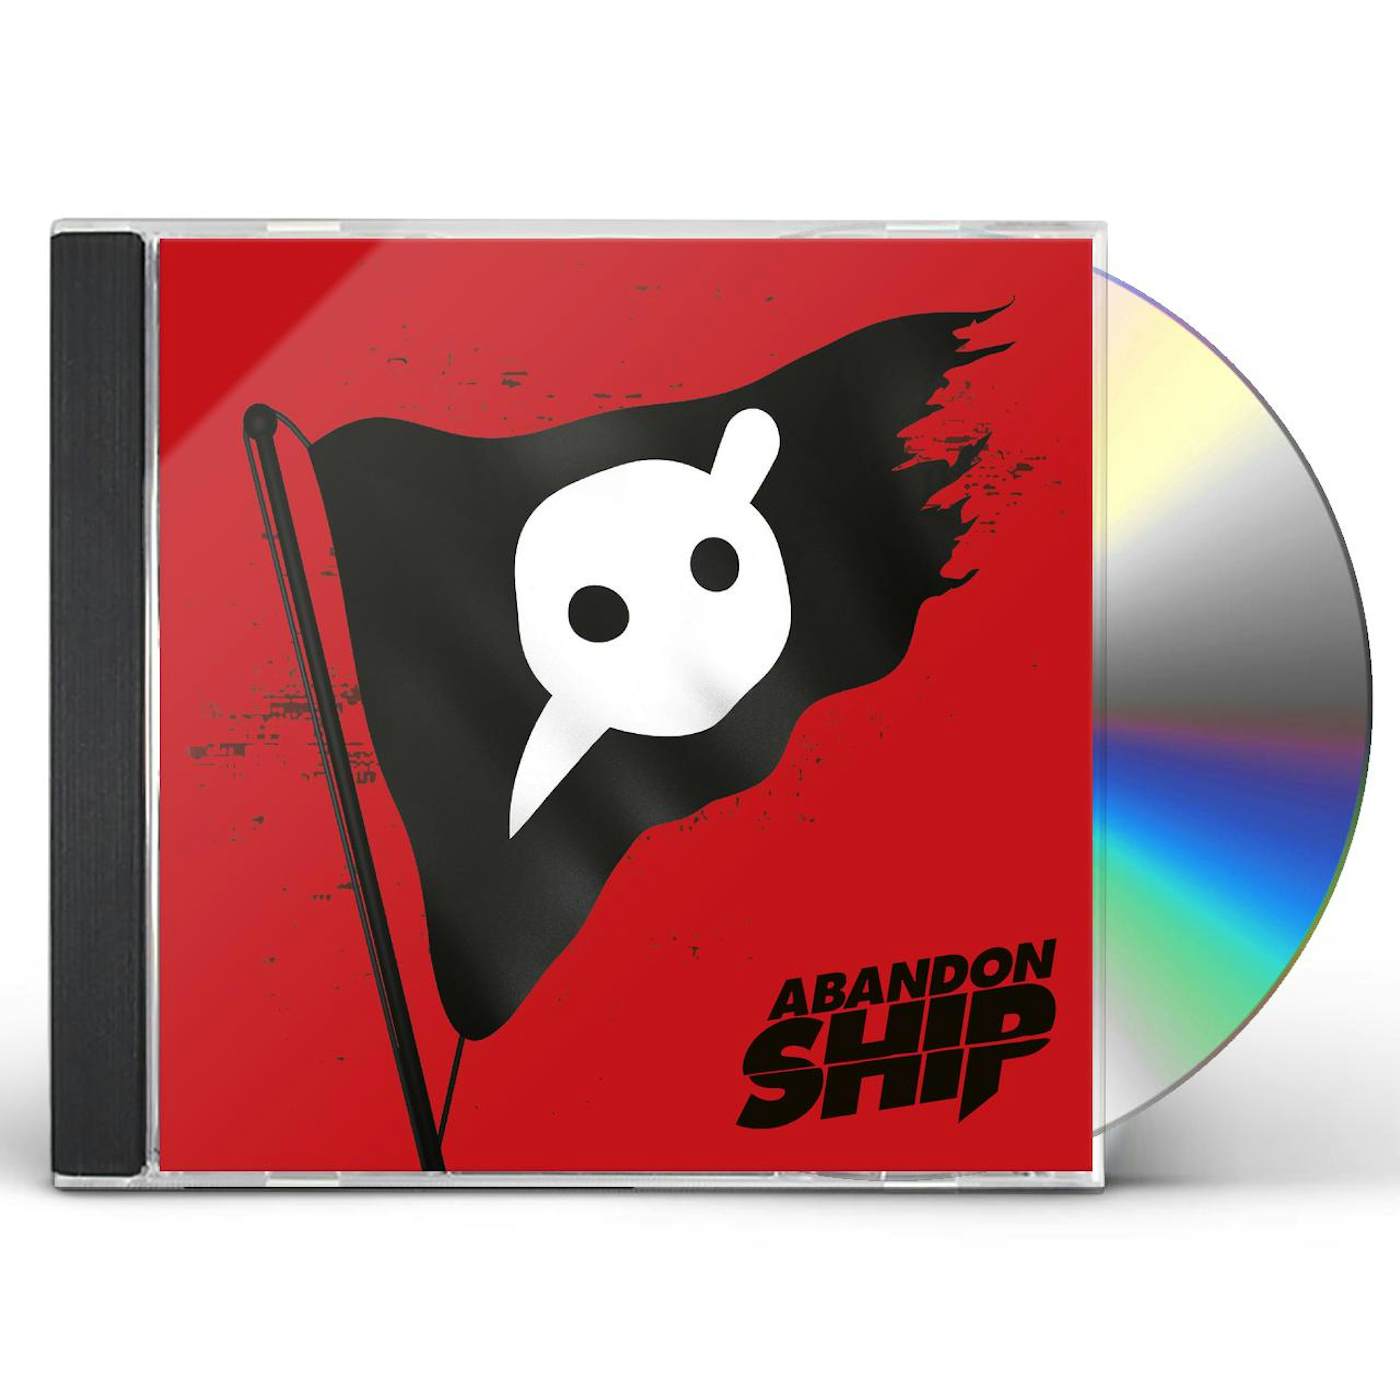 Knife Party ABANDON SHIP CD